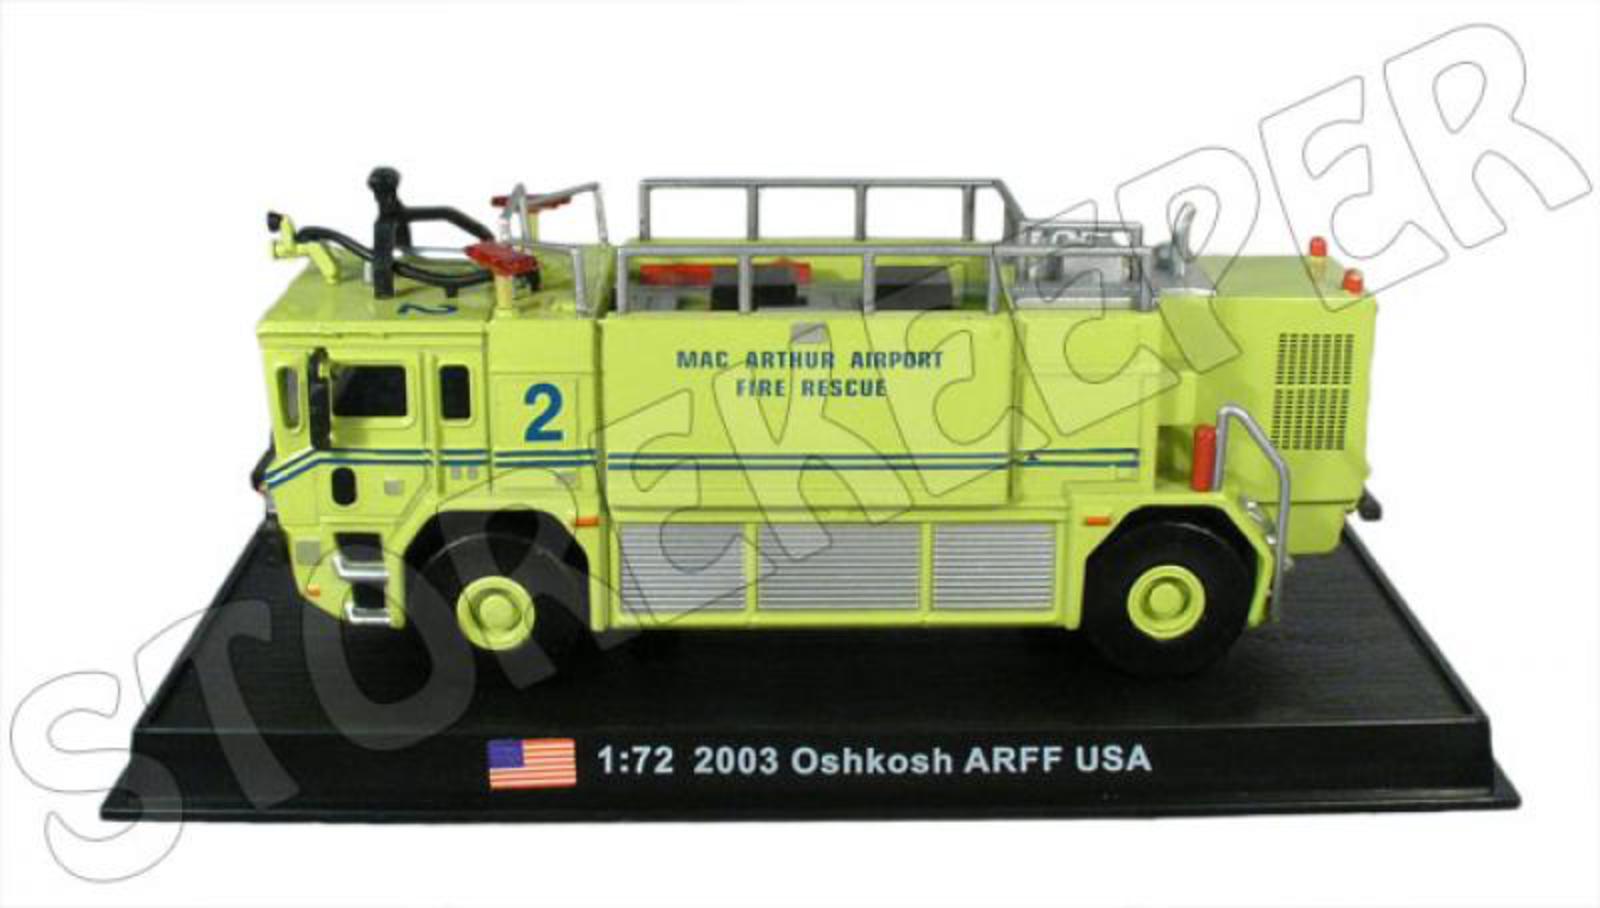 Storekeeper-Paradise Models FIRE ENGINES, Fire Truck, Oshkosh ARFF ...